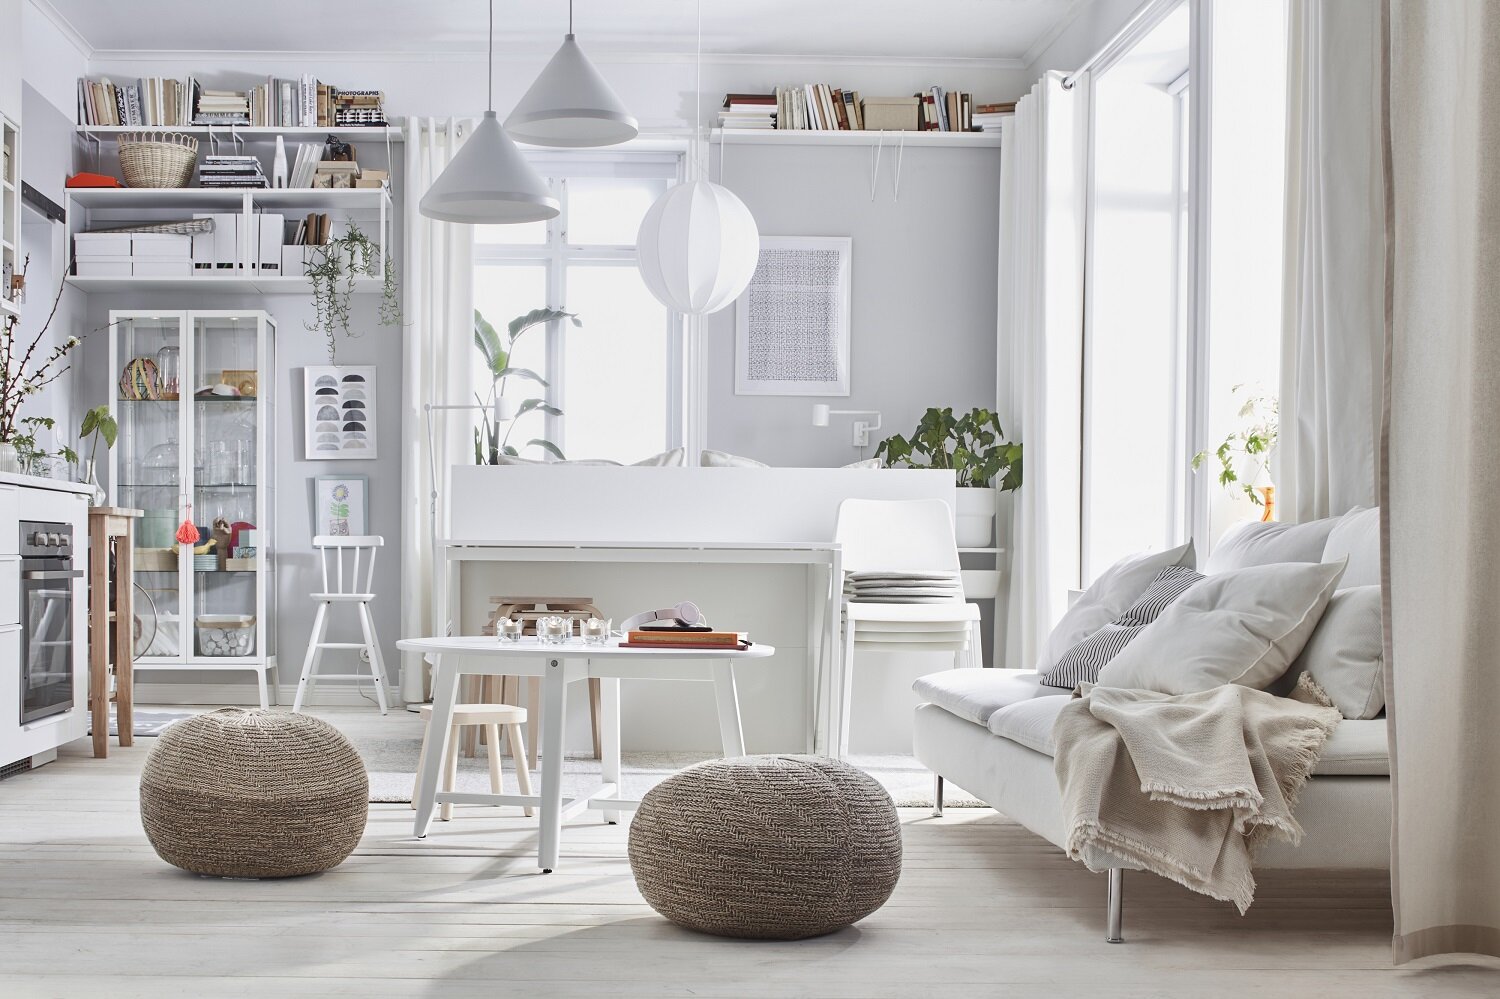 Living room decor ideas - white colors